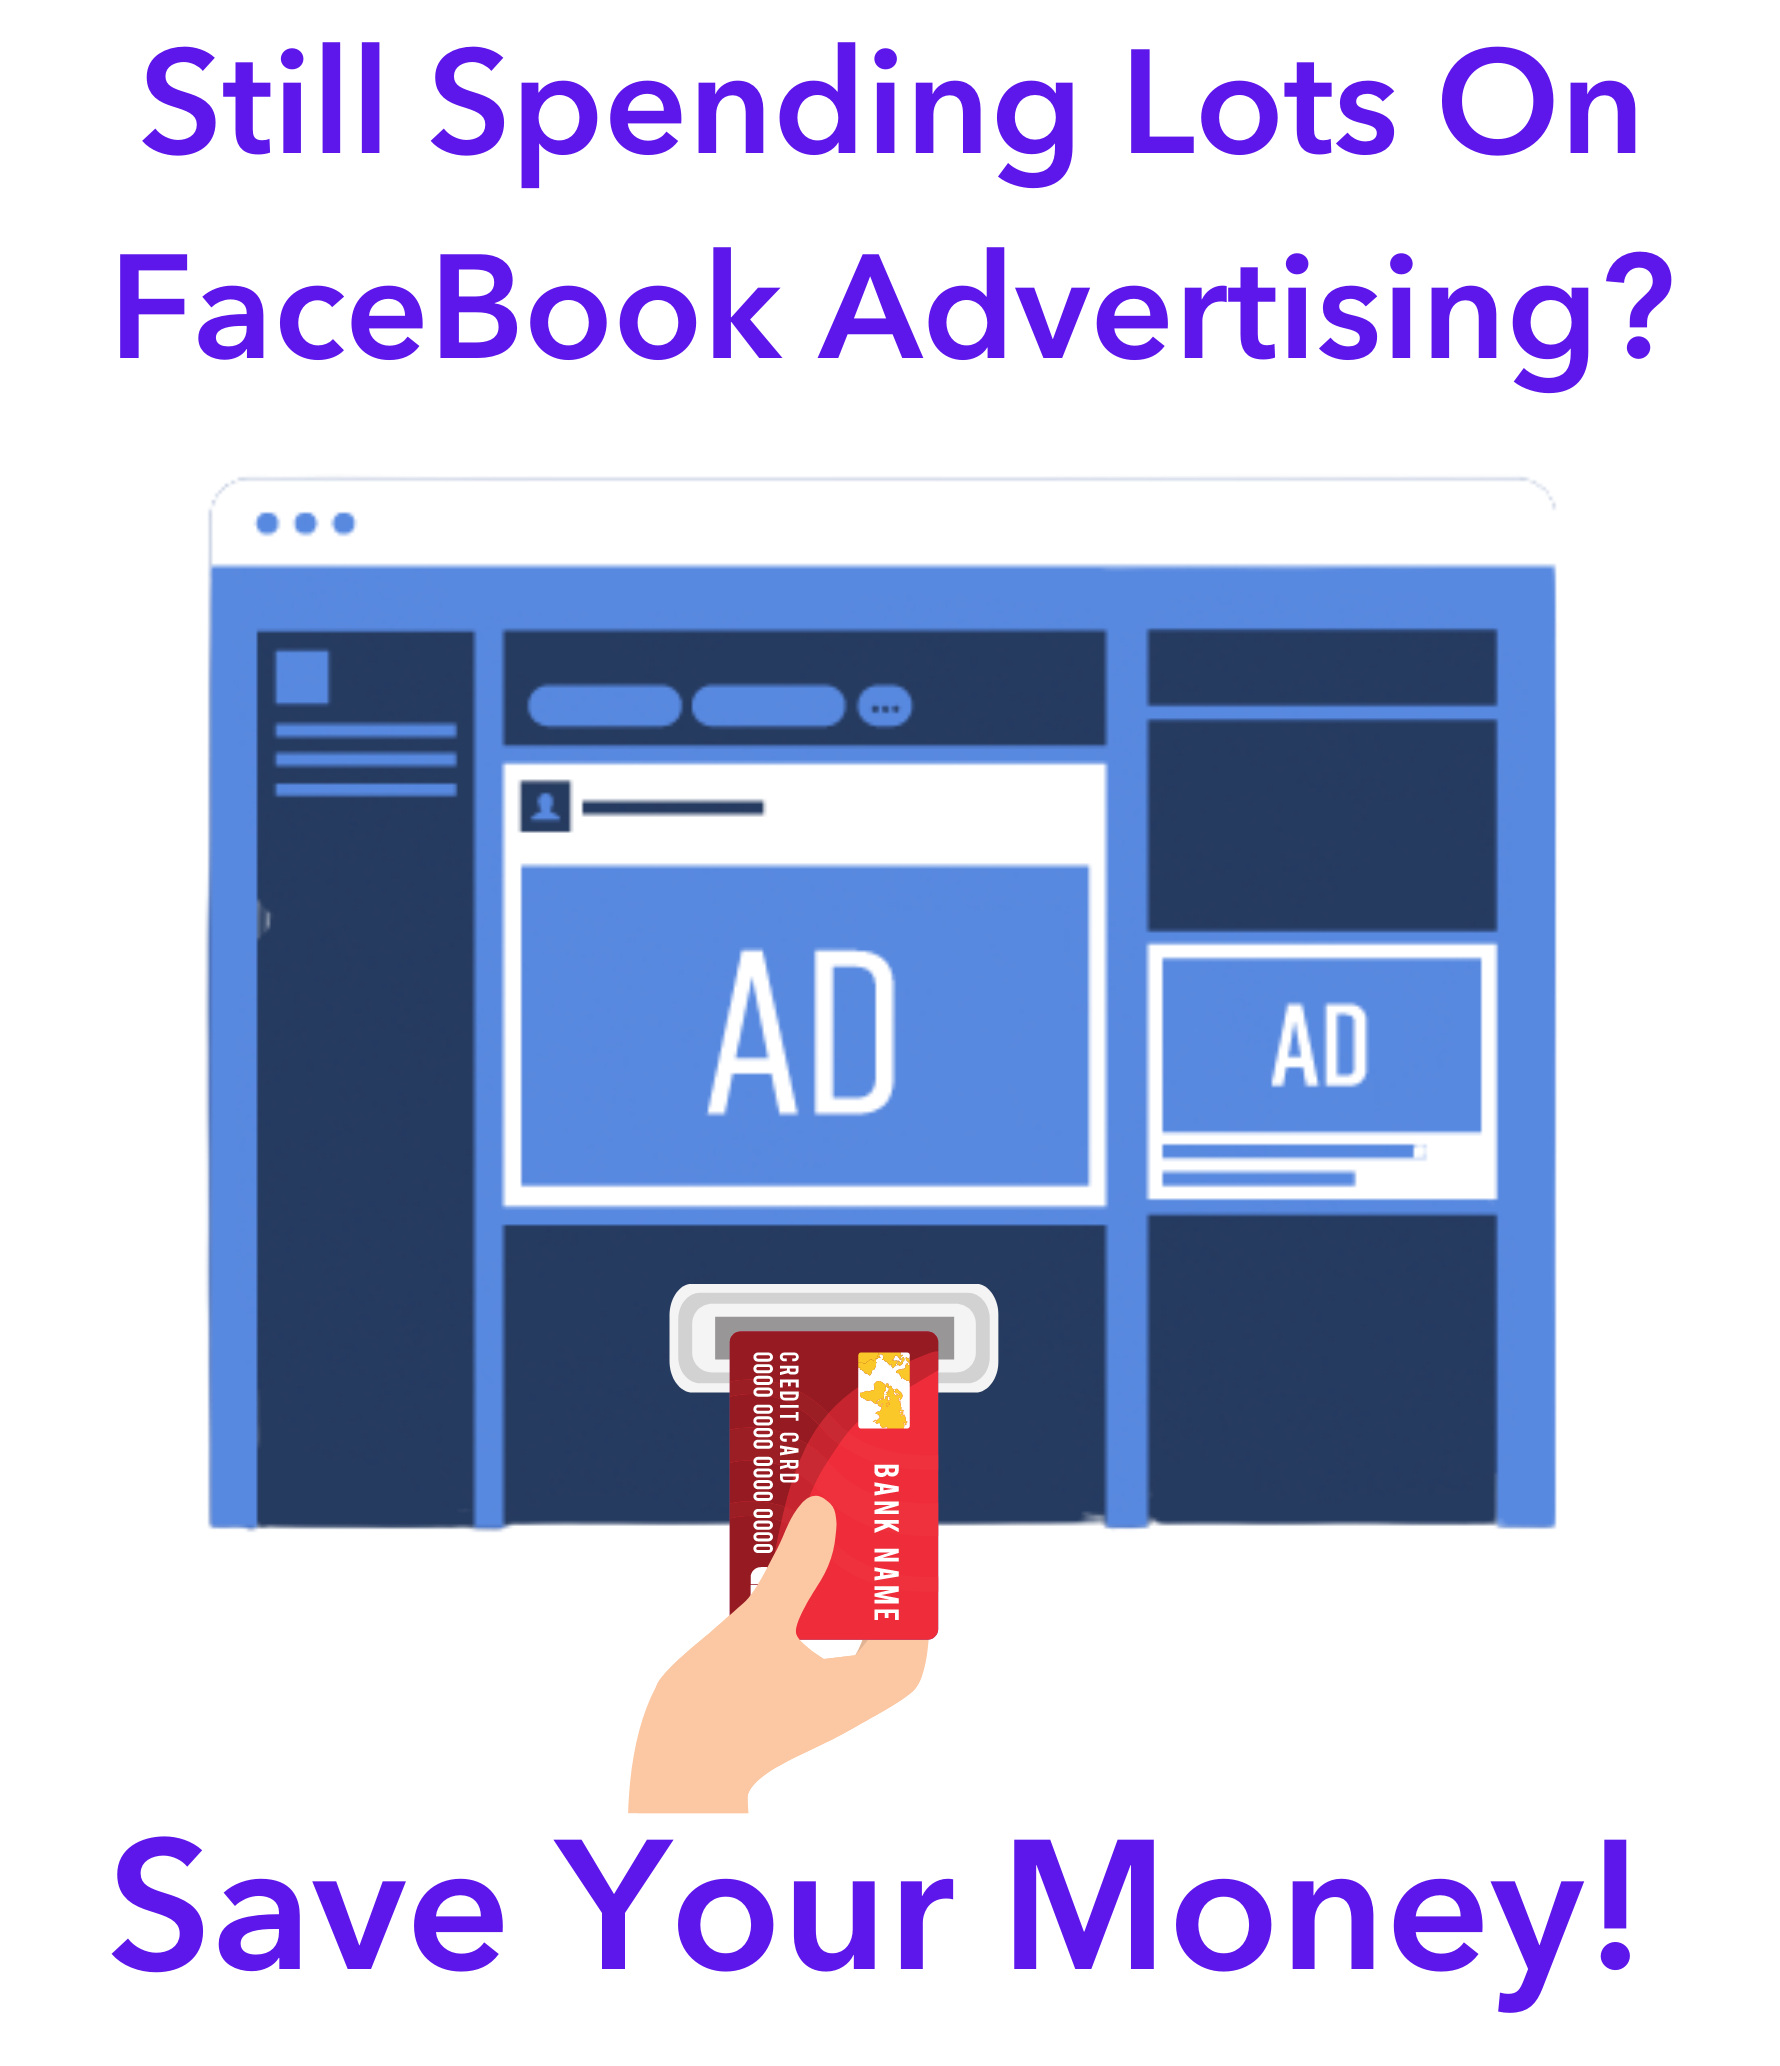 FaceBook Advertising Spend